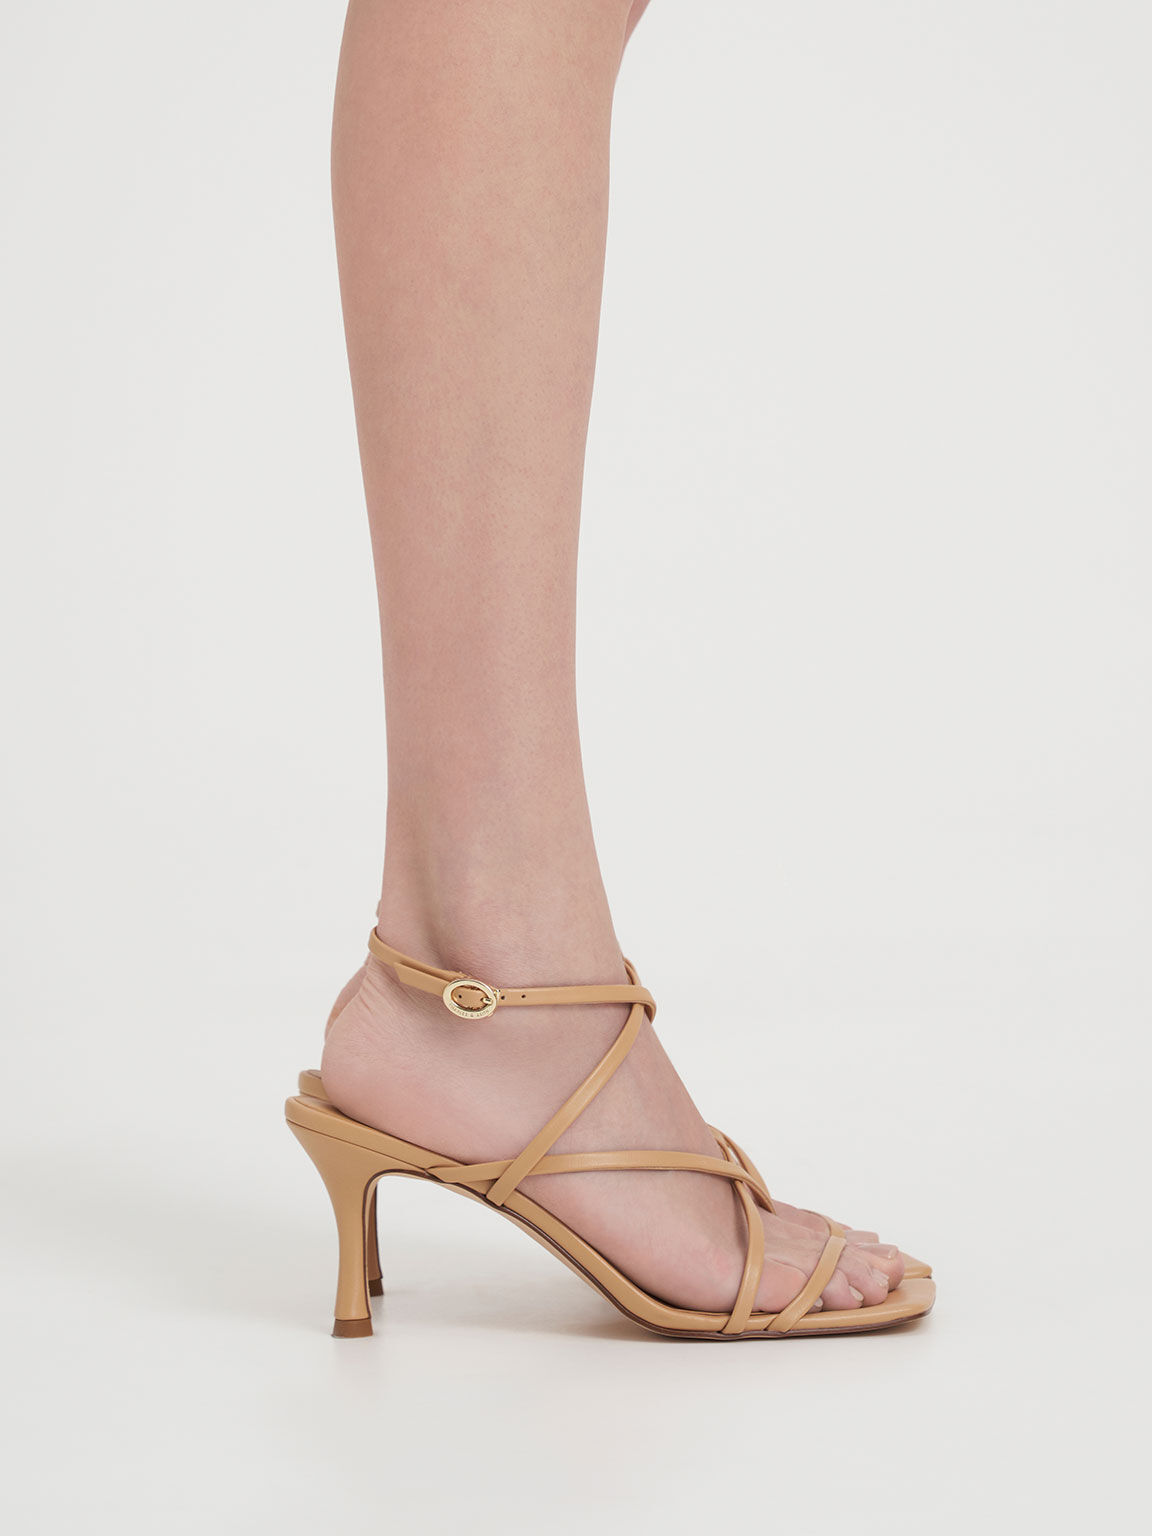 Crossover Strappy Sandals, Tan, hi-res